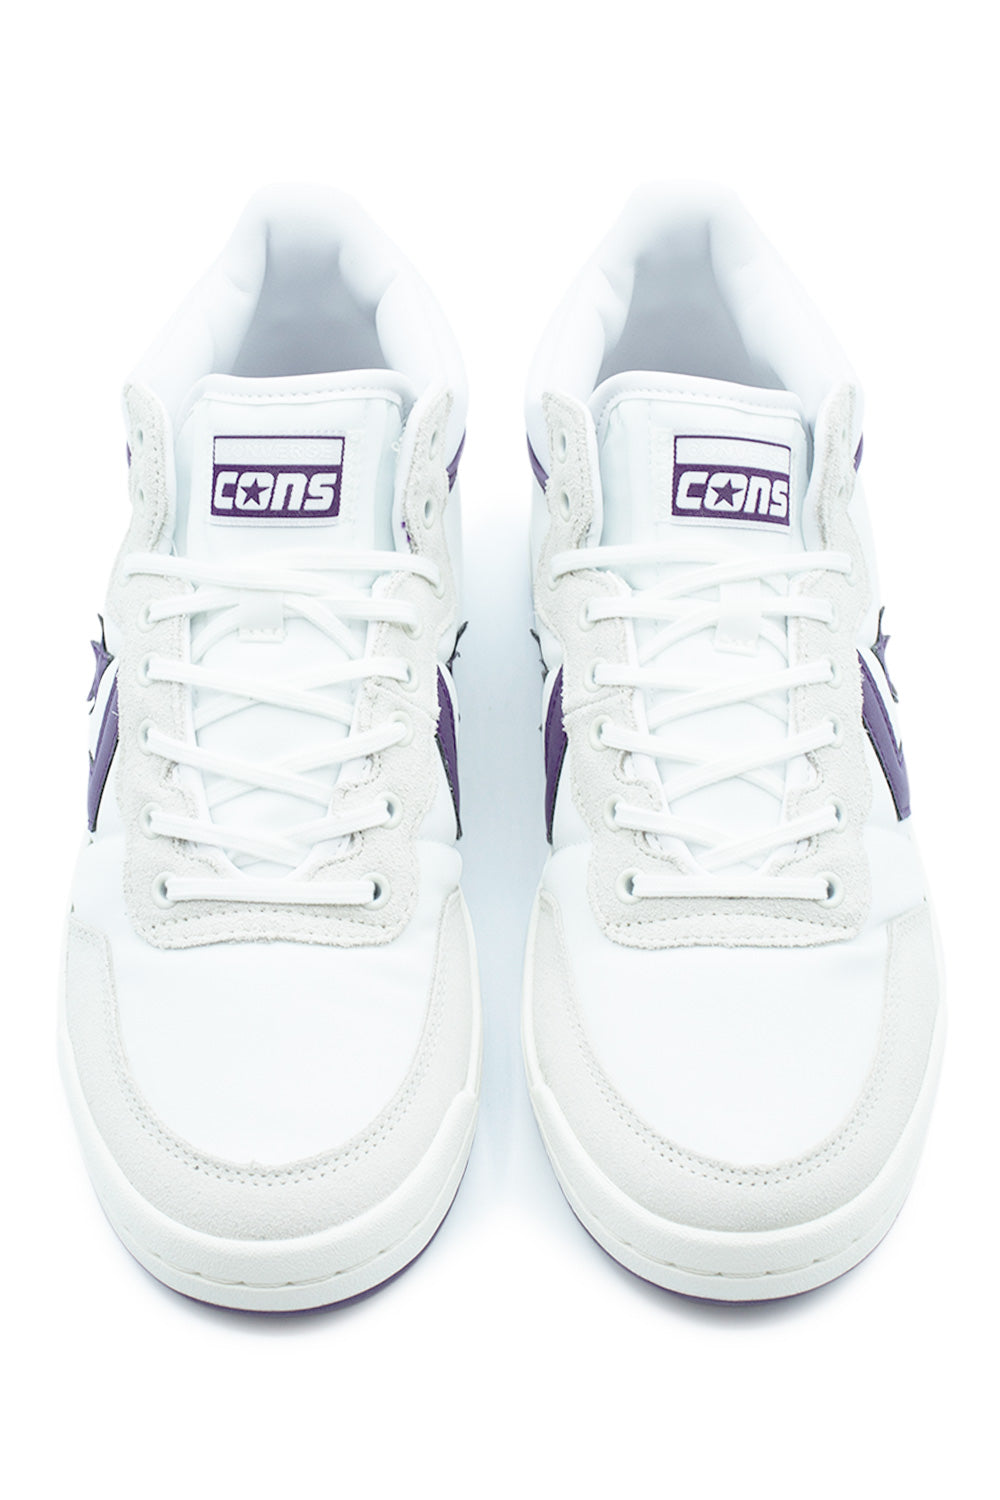 Converse CONS Fastbreak Pro Mid Shoe White / Vaporous Gray - BONKERS